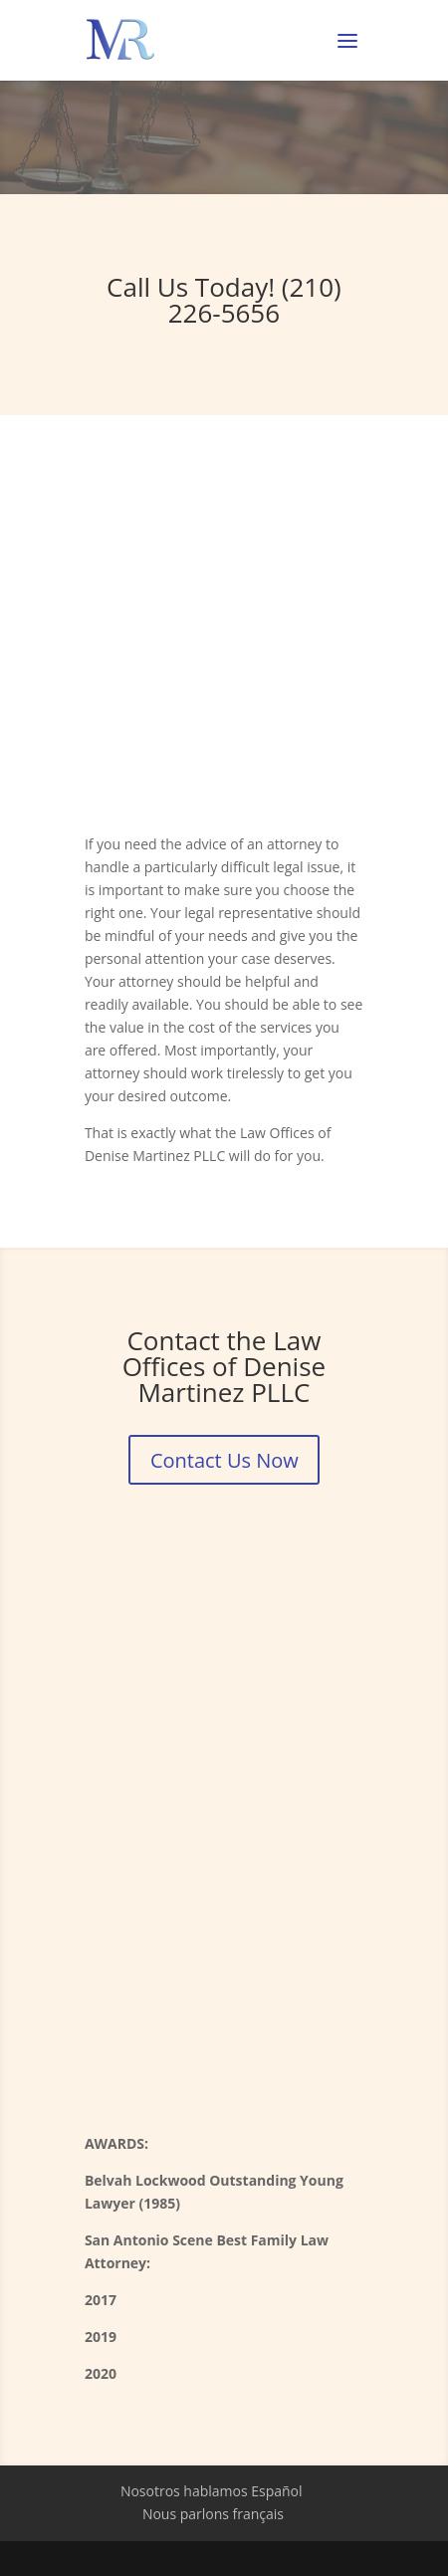 Denise Martinez PLLC - San Antonio TX Lawyers